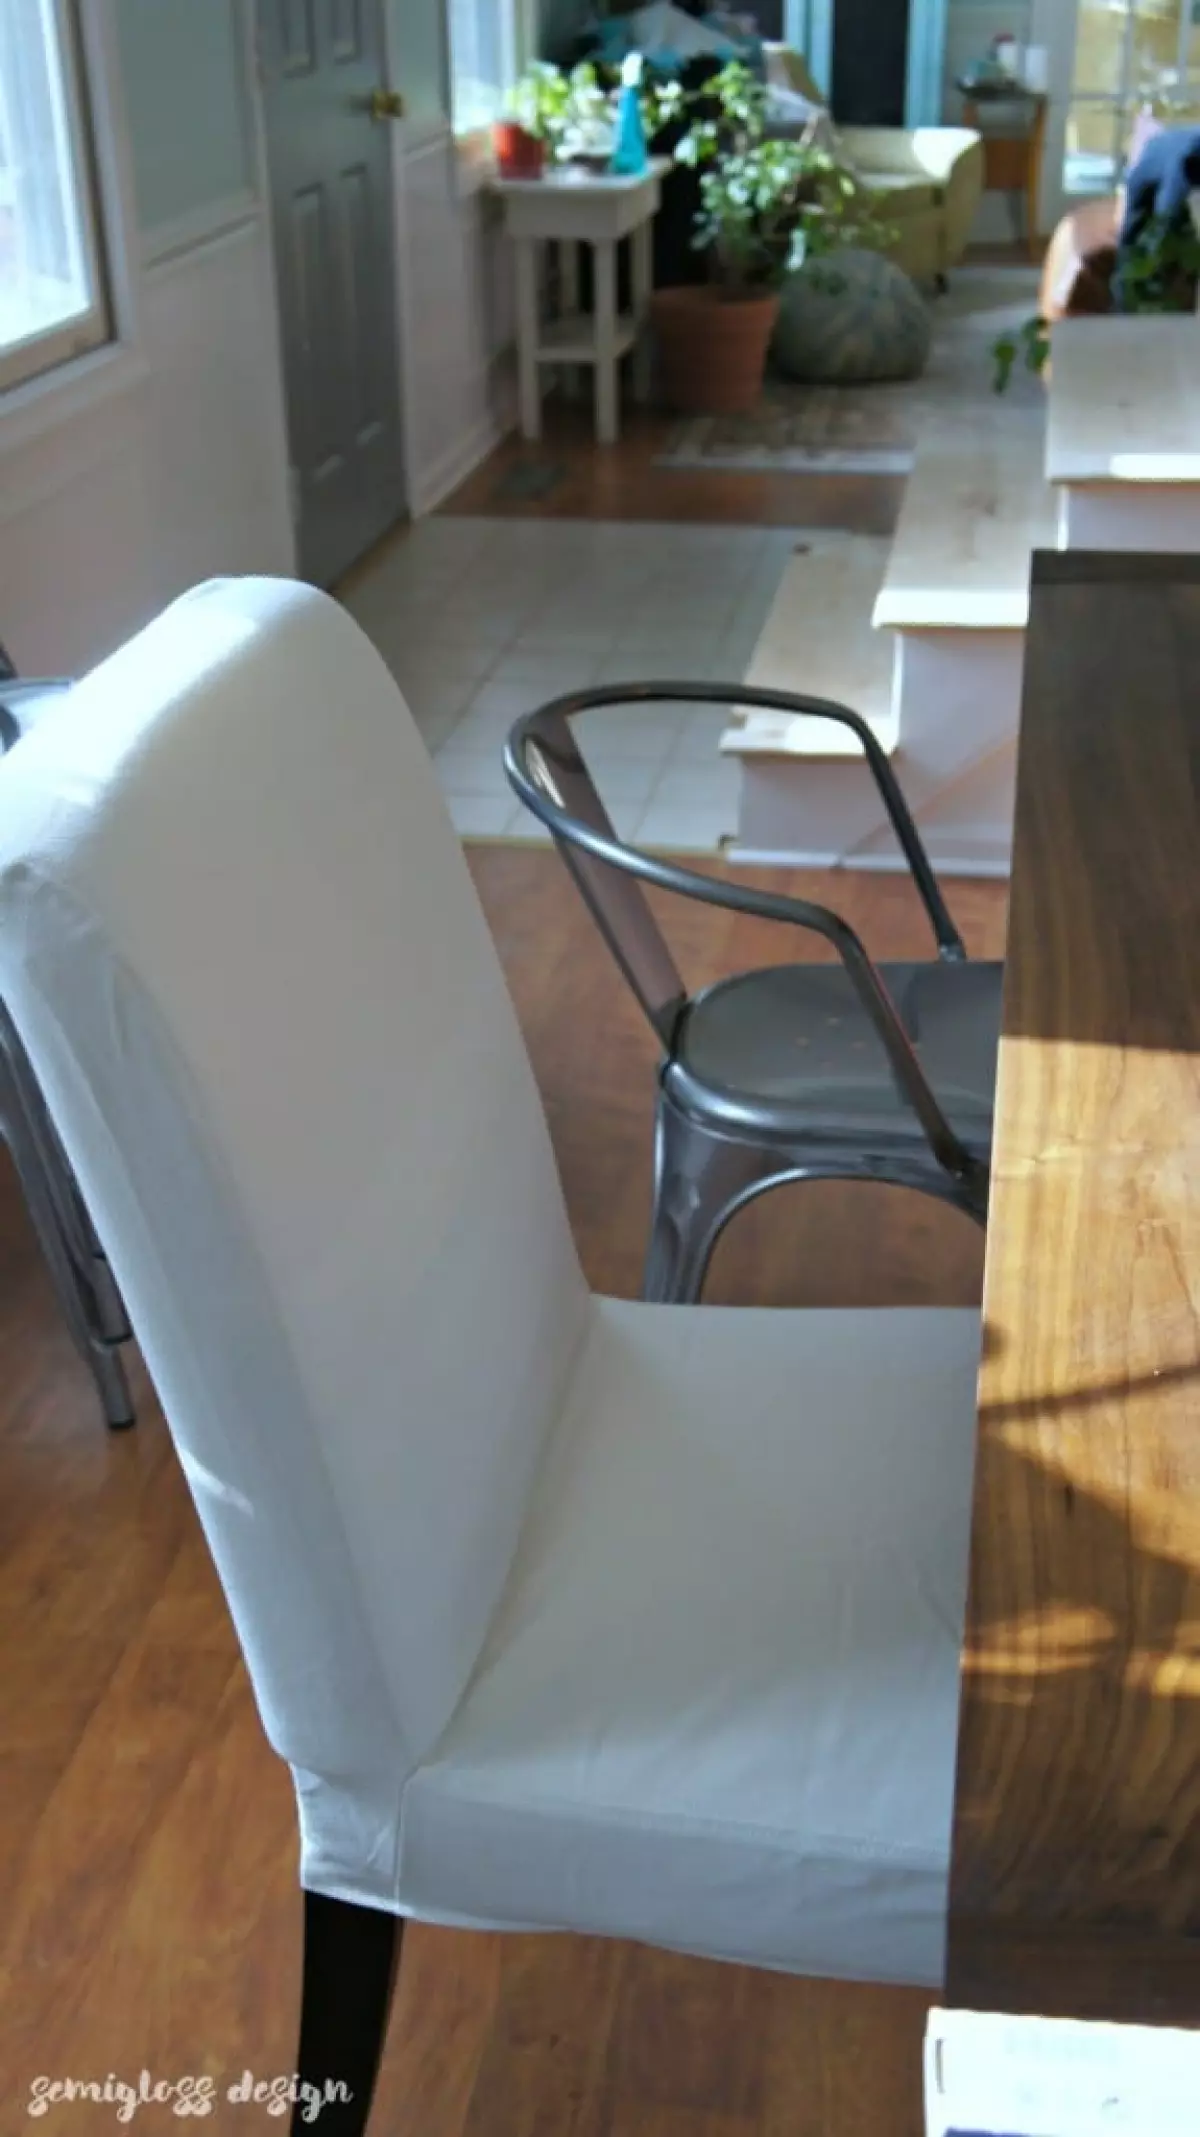 IKEA Henriksdal chair size comparison to farmhouse chair